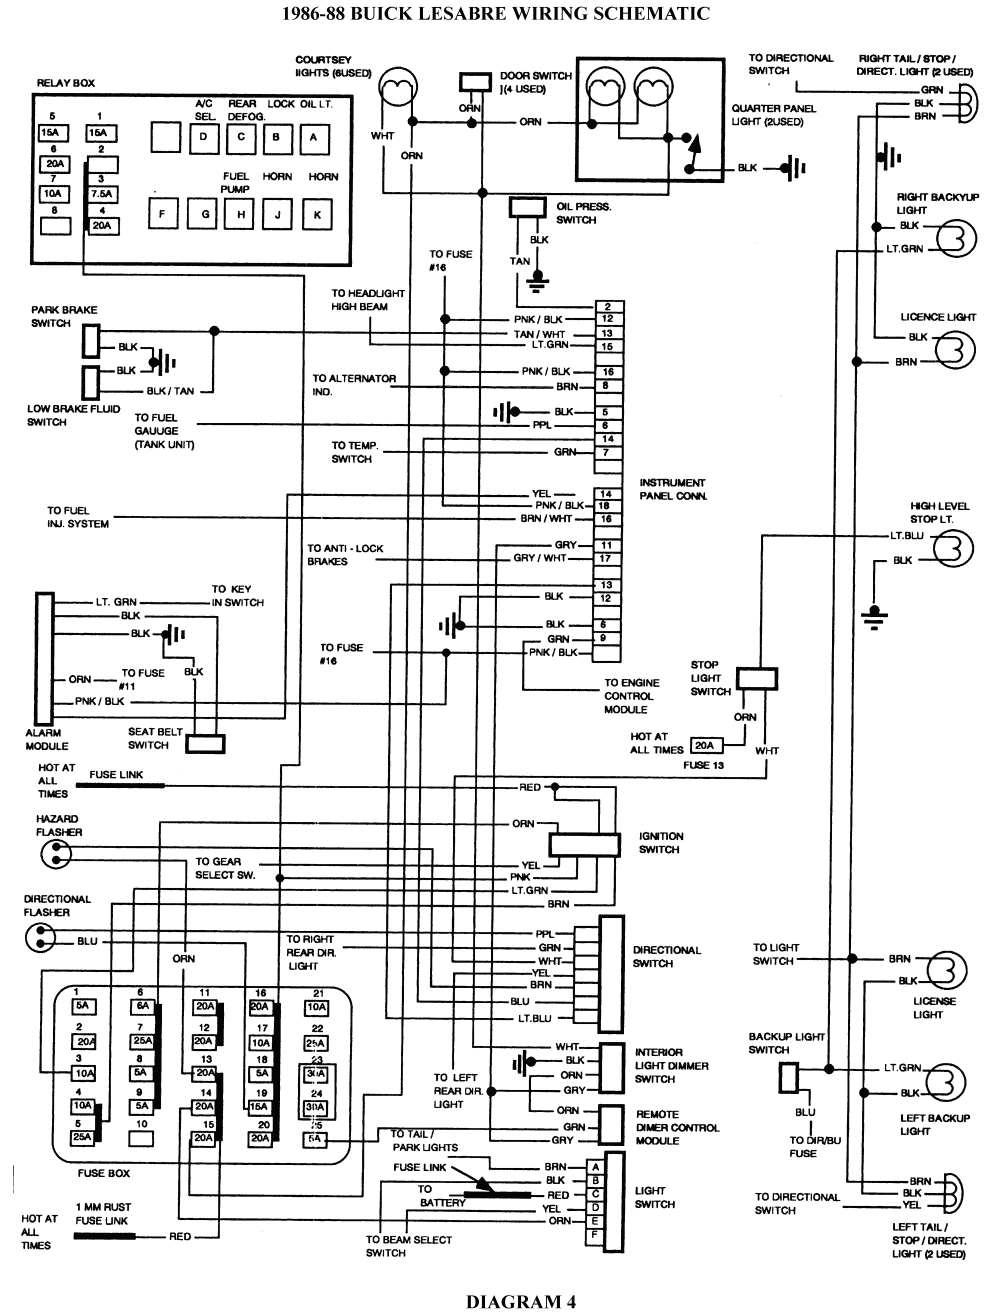 94 Old 88 Wiring Diagram - Wiring Diagram Networks